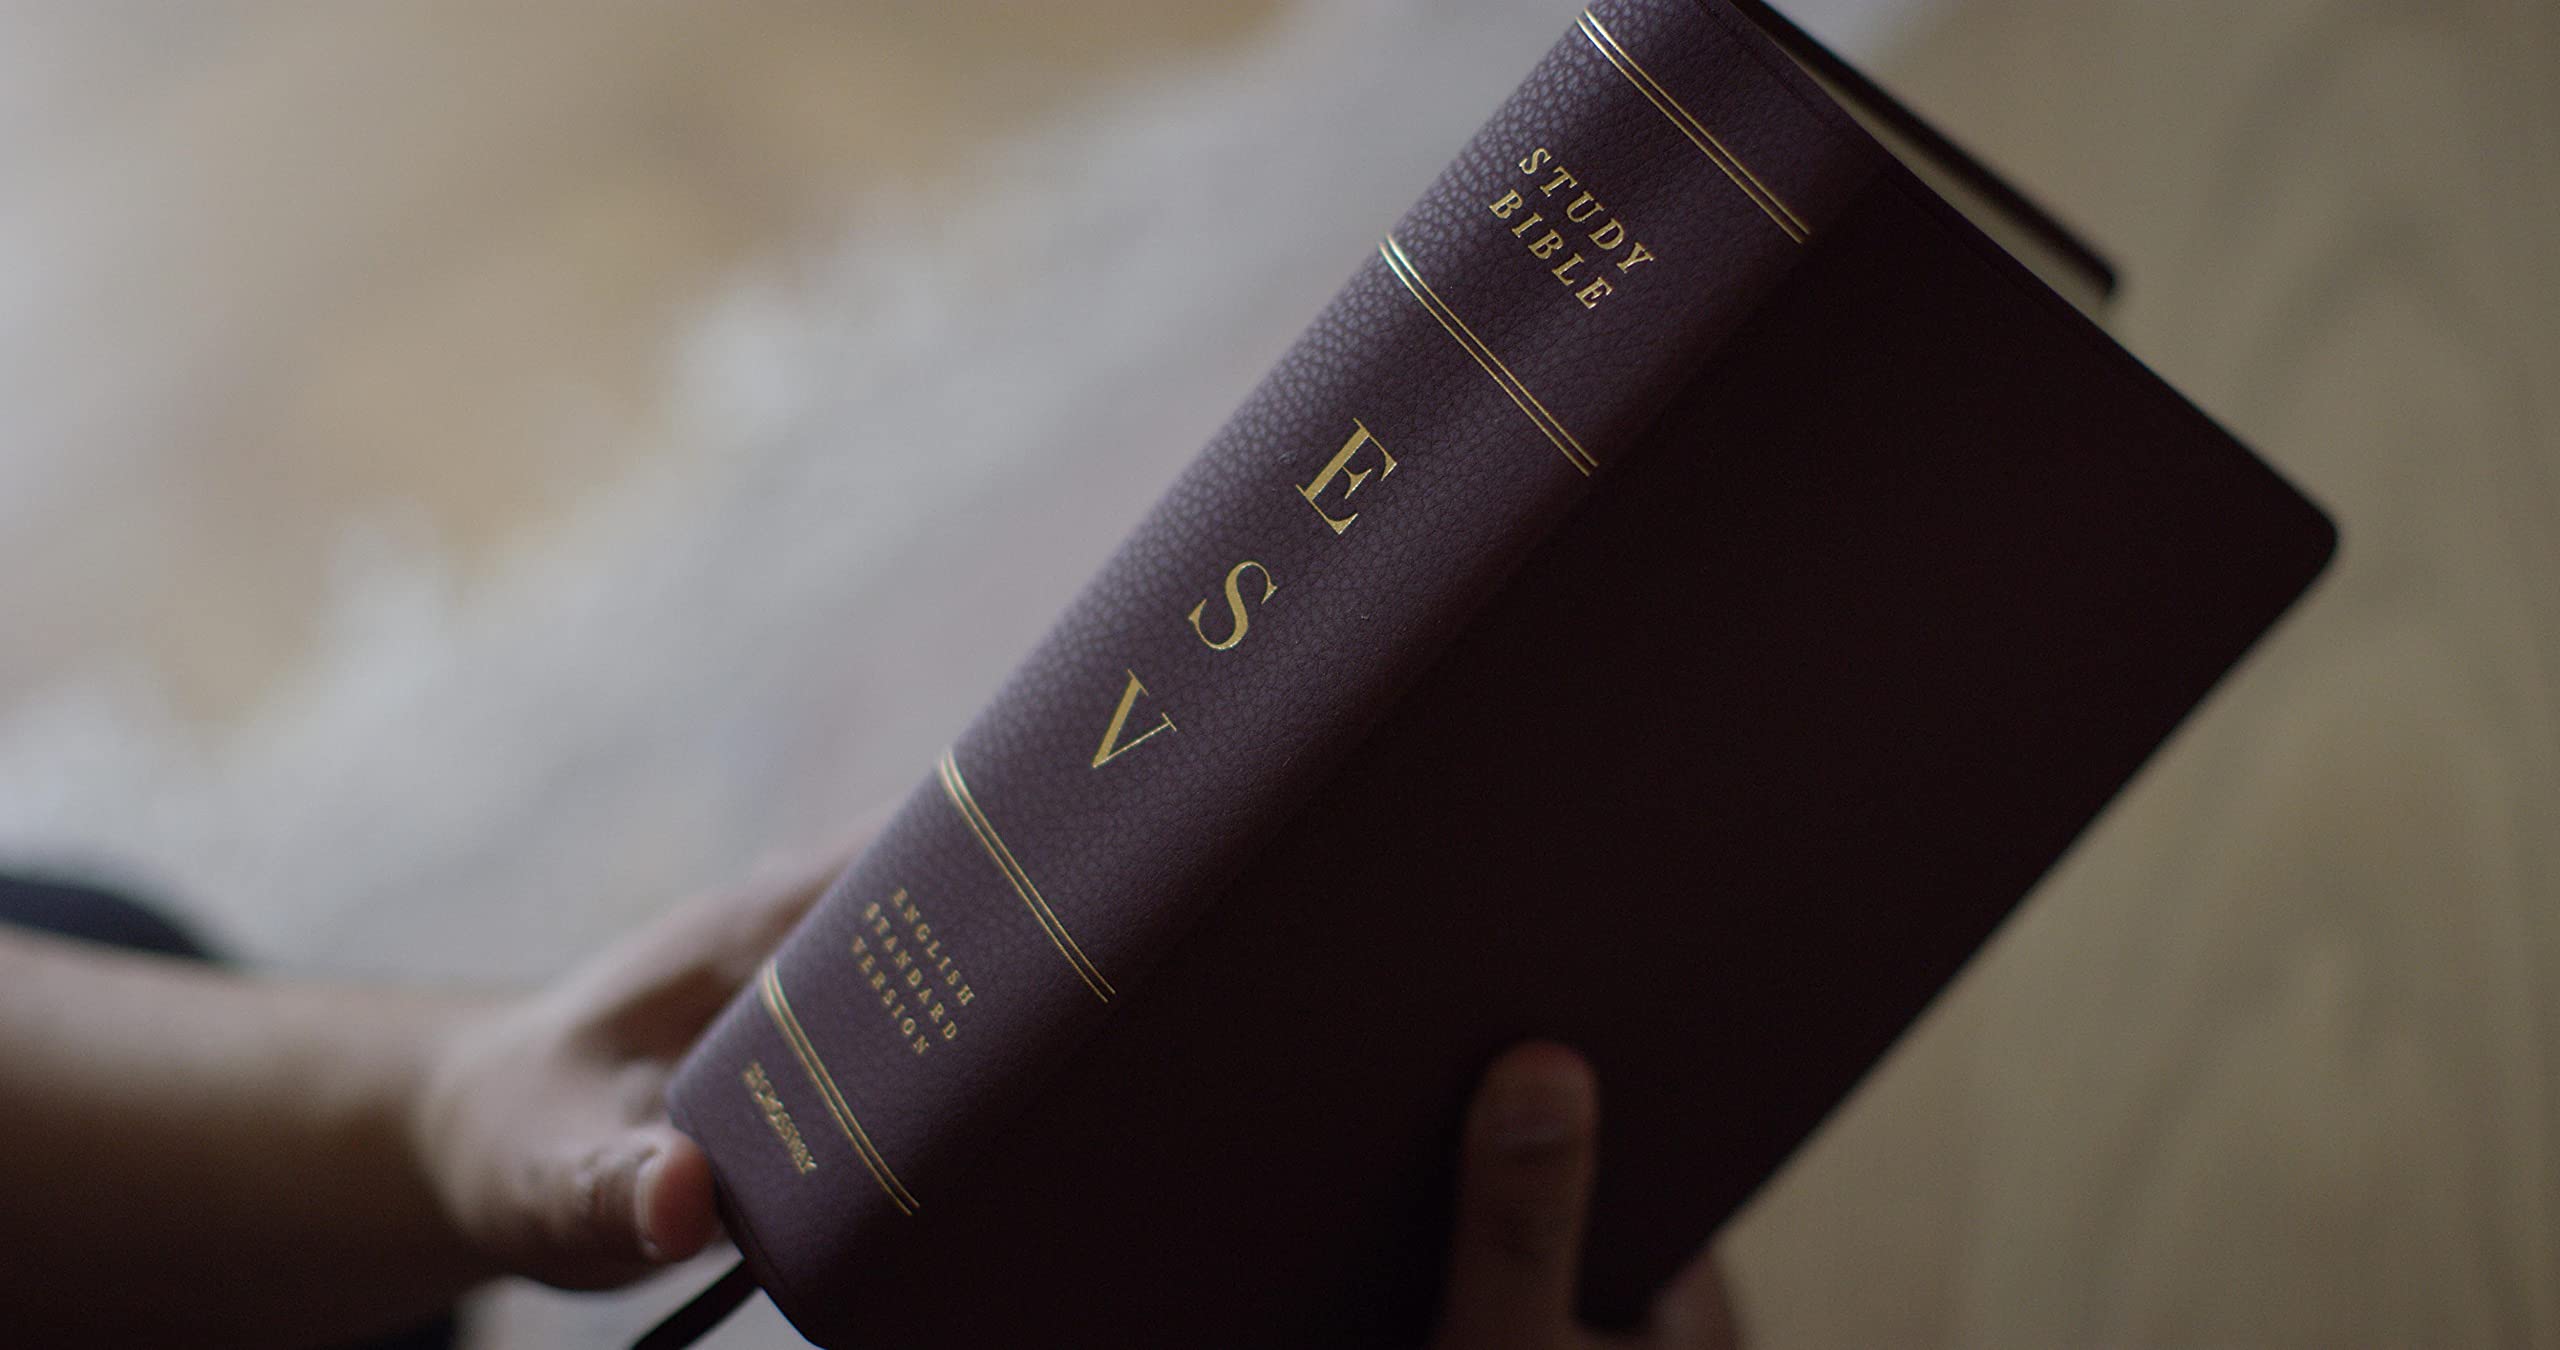 ESV Study Bible, Large Print (Bonded Leather, Burgundy)